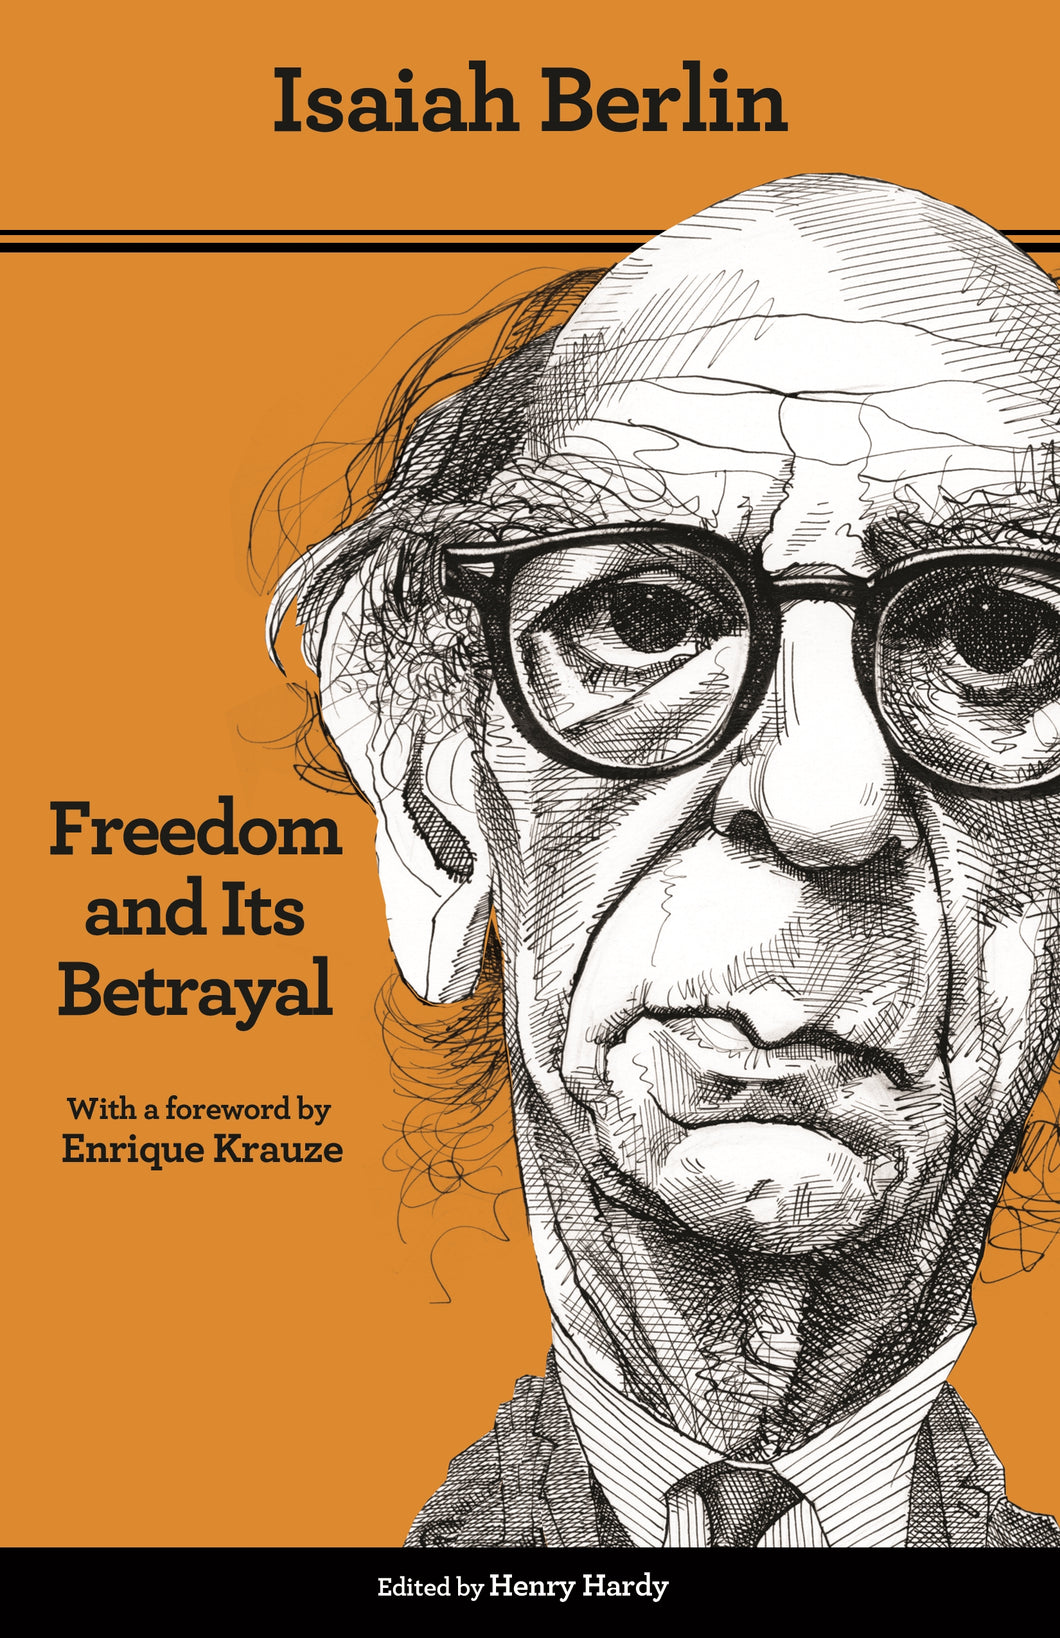 Freedom and Its Betrayal : Six Enemies of Human Liberty - Updated Edition ร้านหนังสือและสิ่งของ เป็นร้านหนังสือภาษาอังกฤษหายาก และร้านกาแฟ หรือ บุ๊คคาเฟ่ ตั้งอยู่สุขุมวิท กรุงเทพ